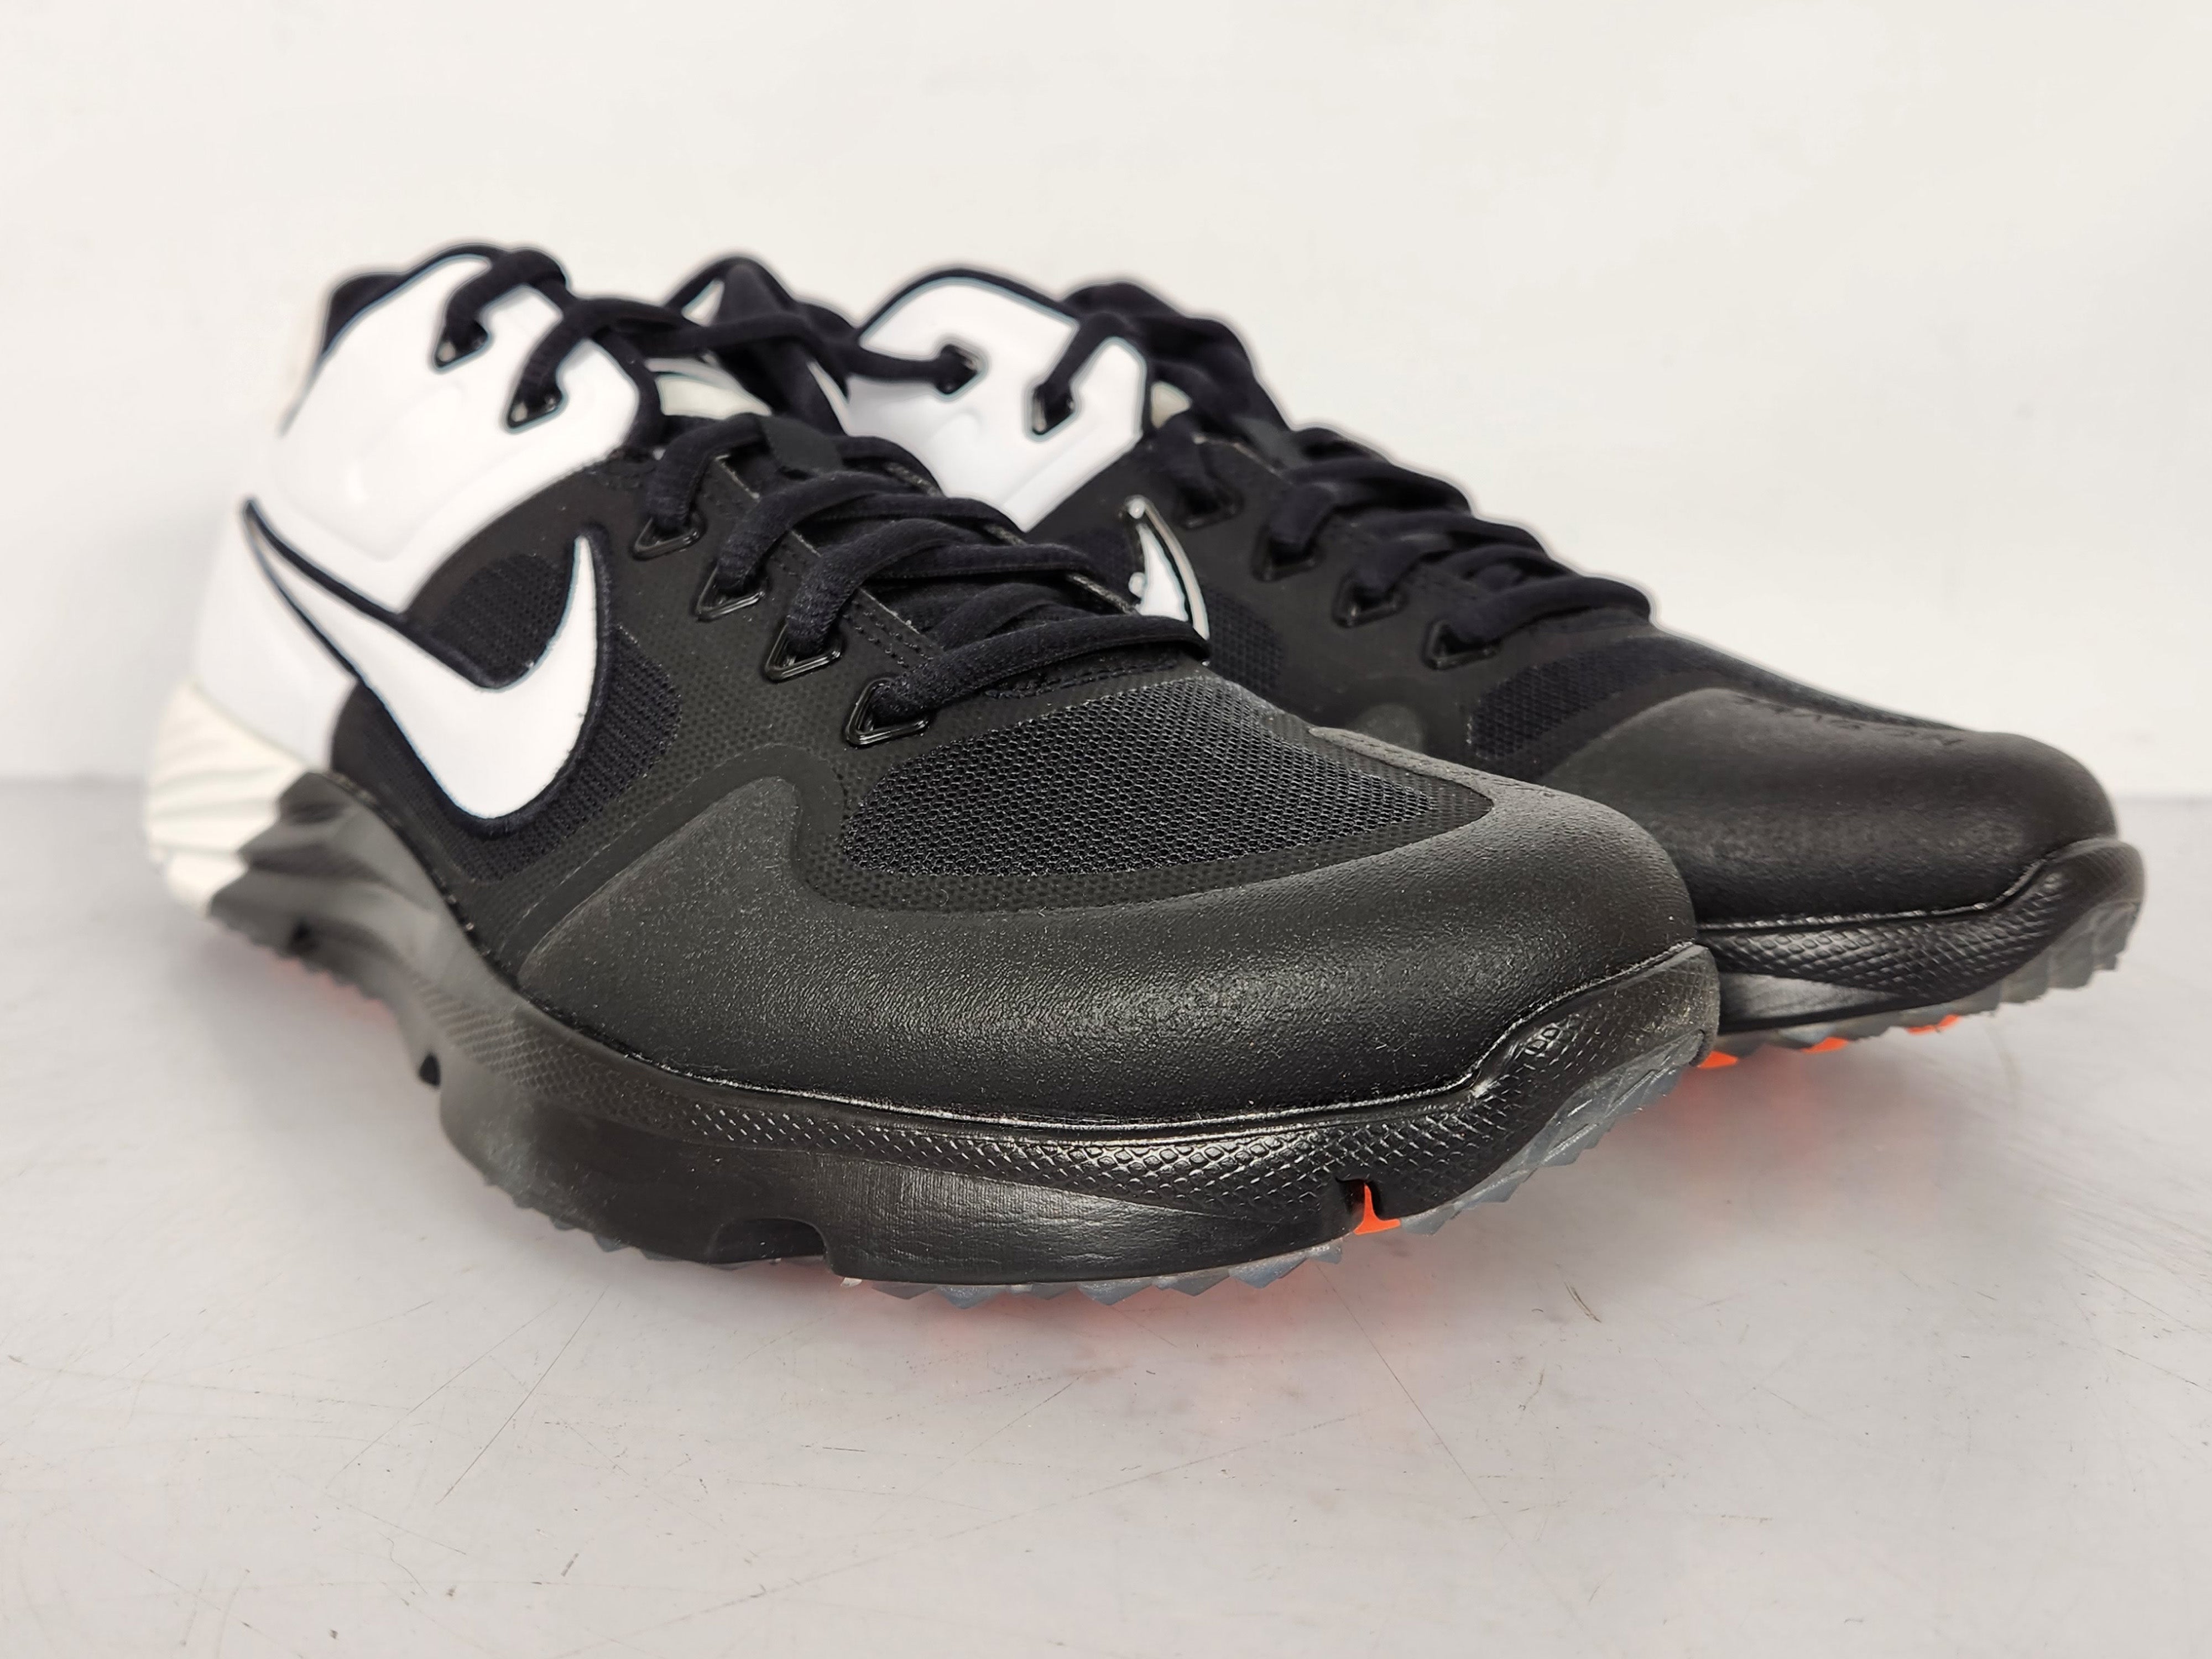 Nike Black/White Alpha Huarache Elite 2 Turf Baseball Shoes Men's Size 5.5 / Women's Size 7